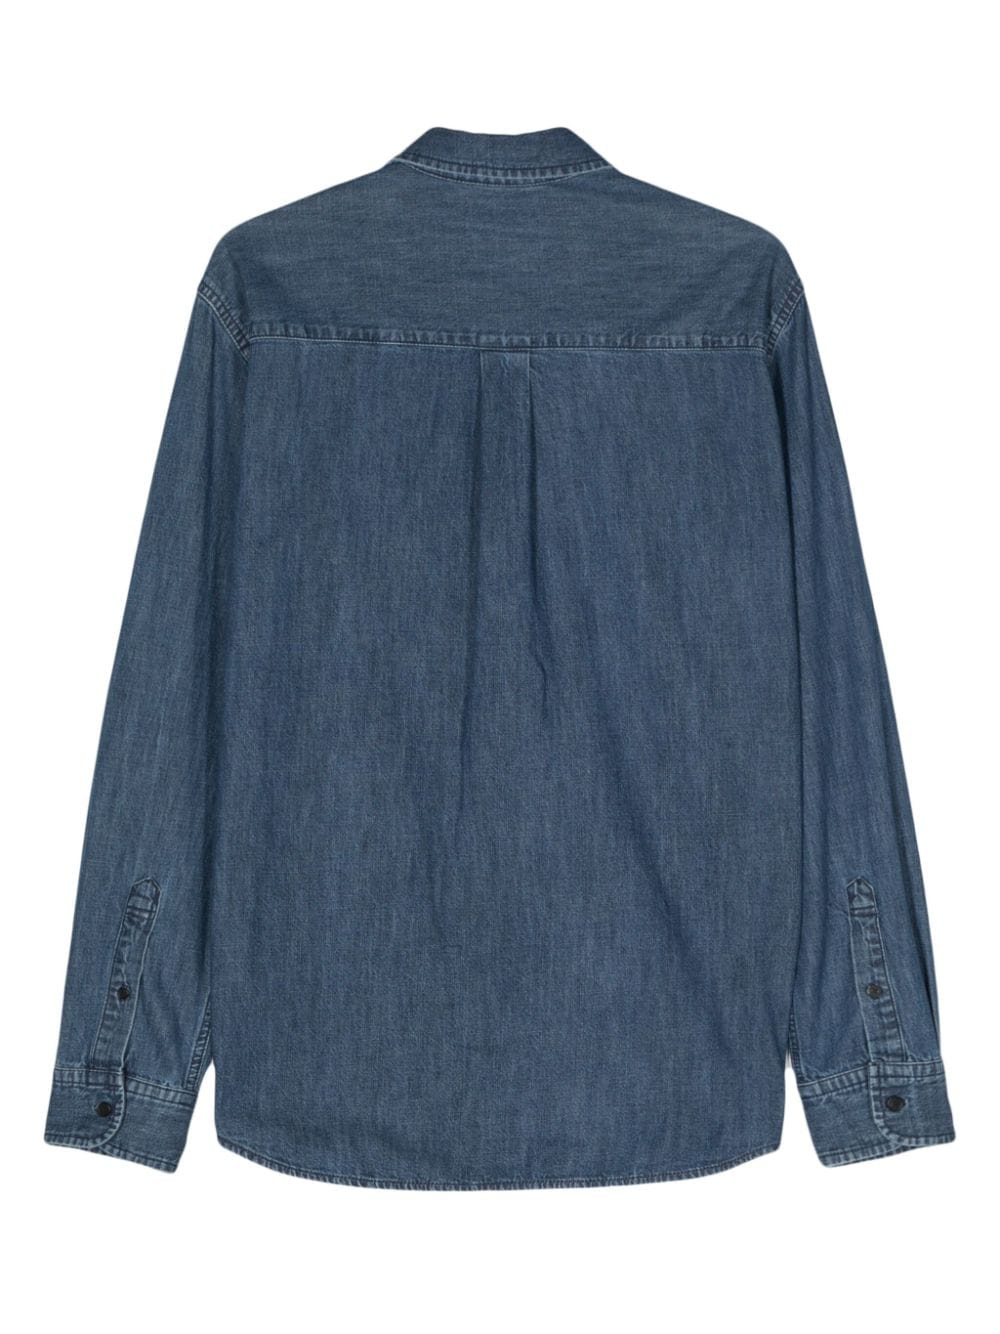 MARANT Denim overhemd - Blauw